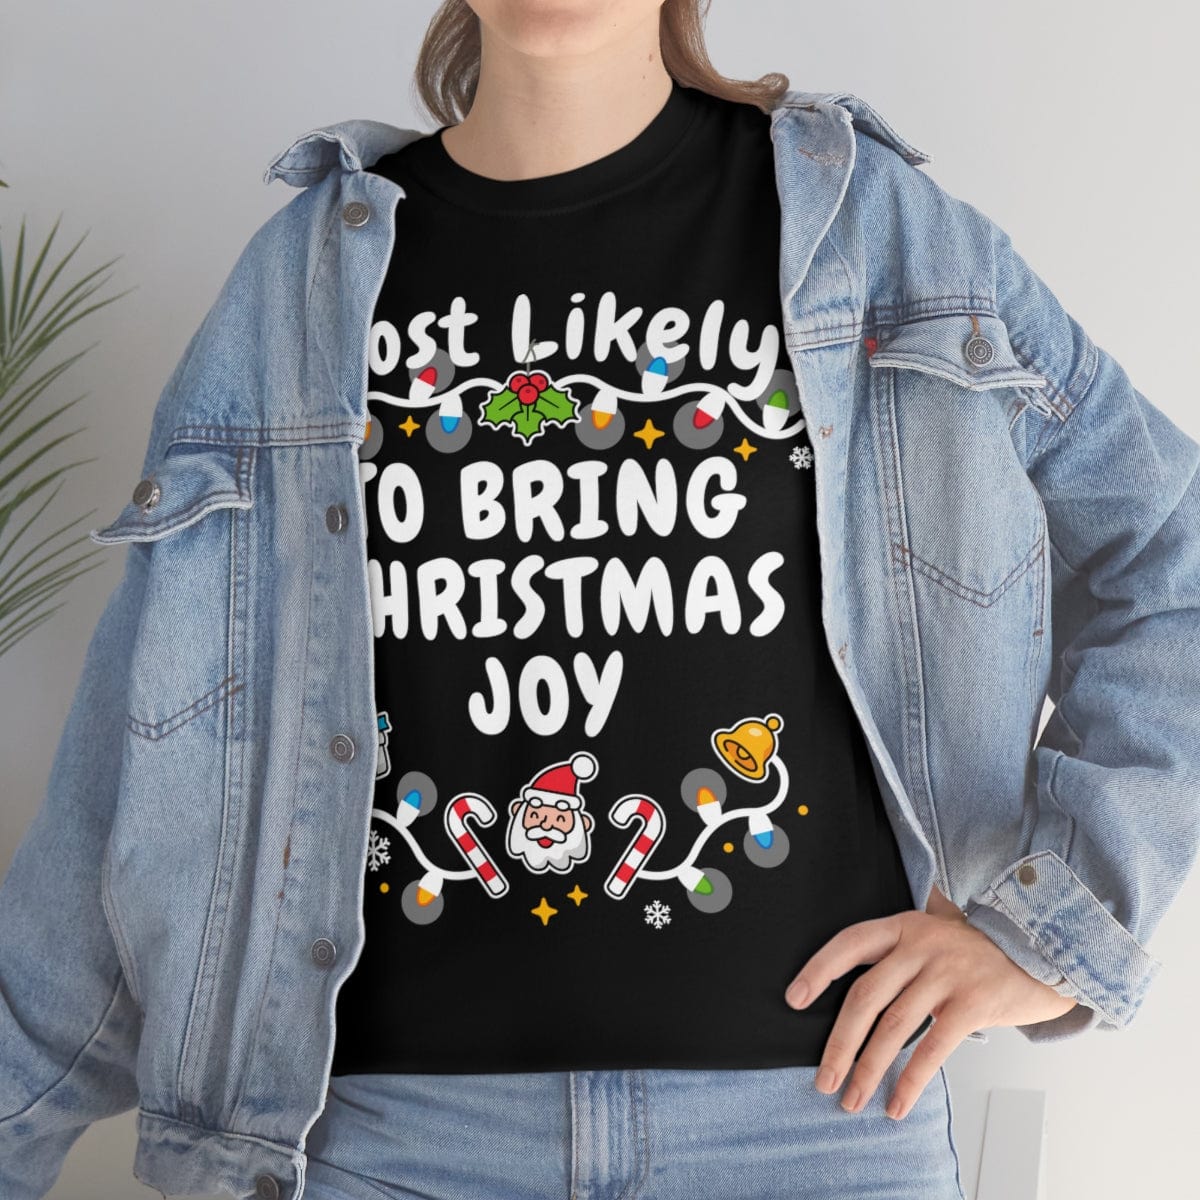 TO BRING CHRISTMAS JOY